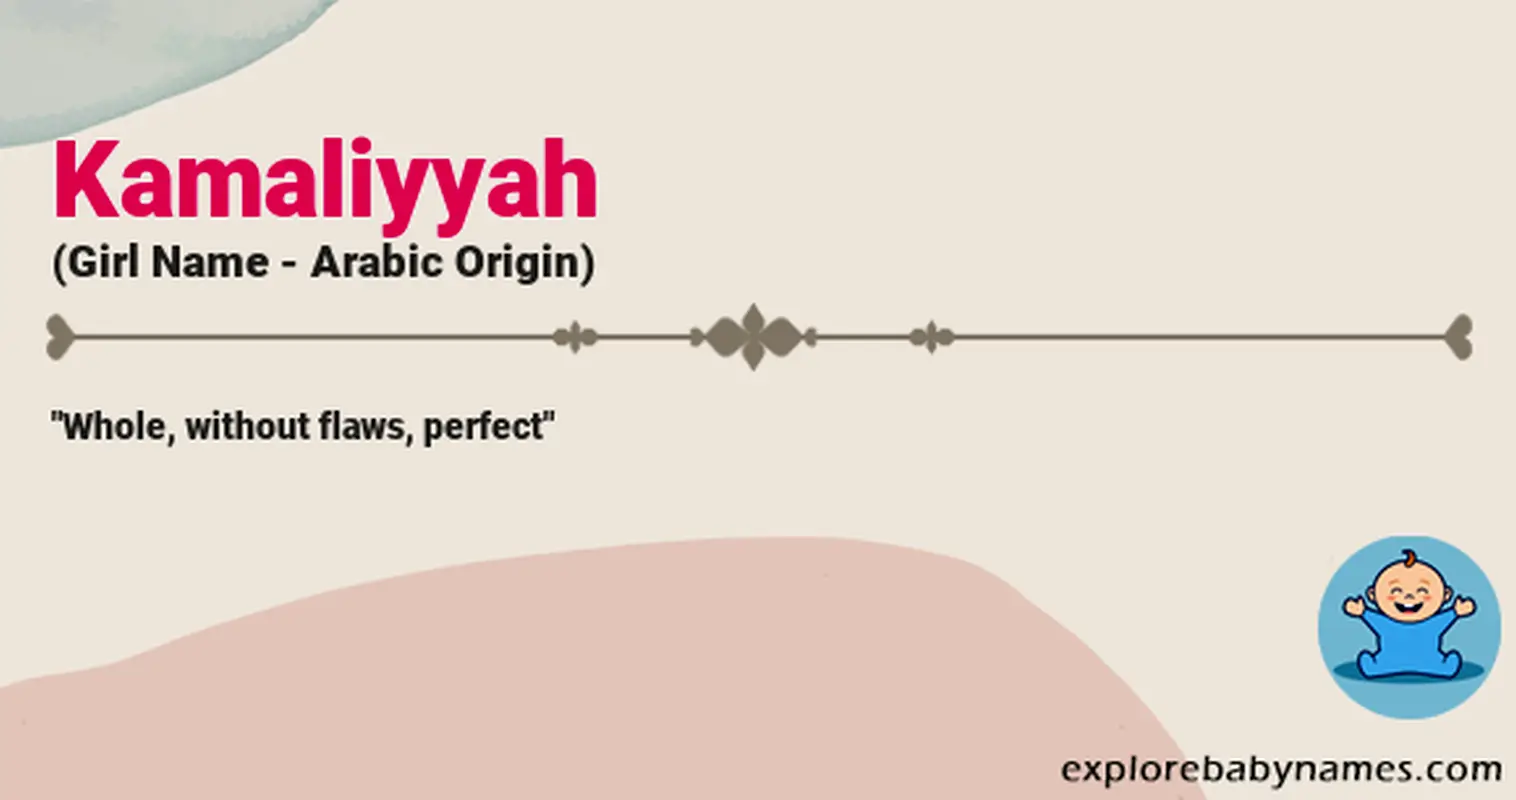 Meaning of Kamaliyyah